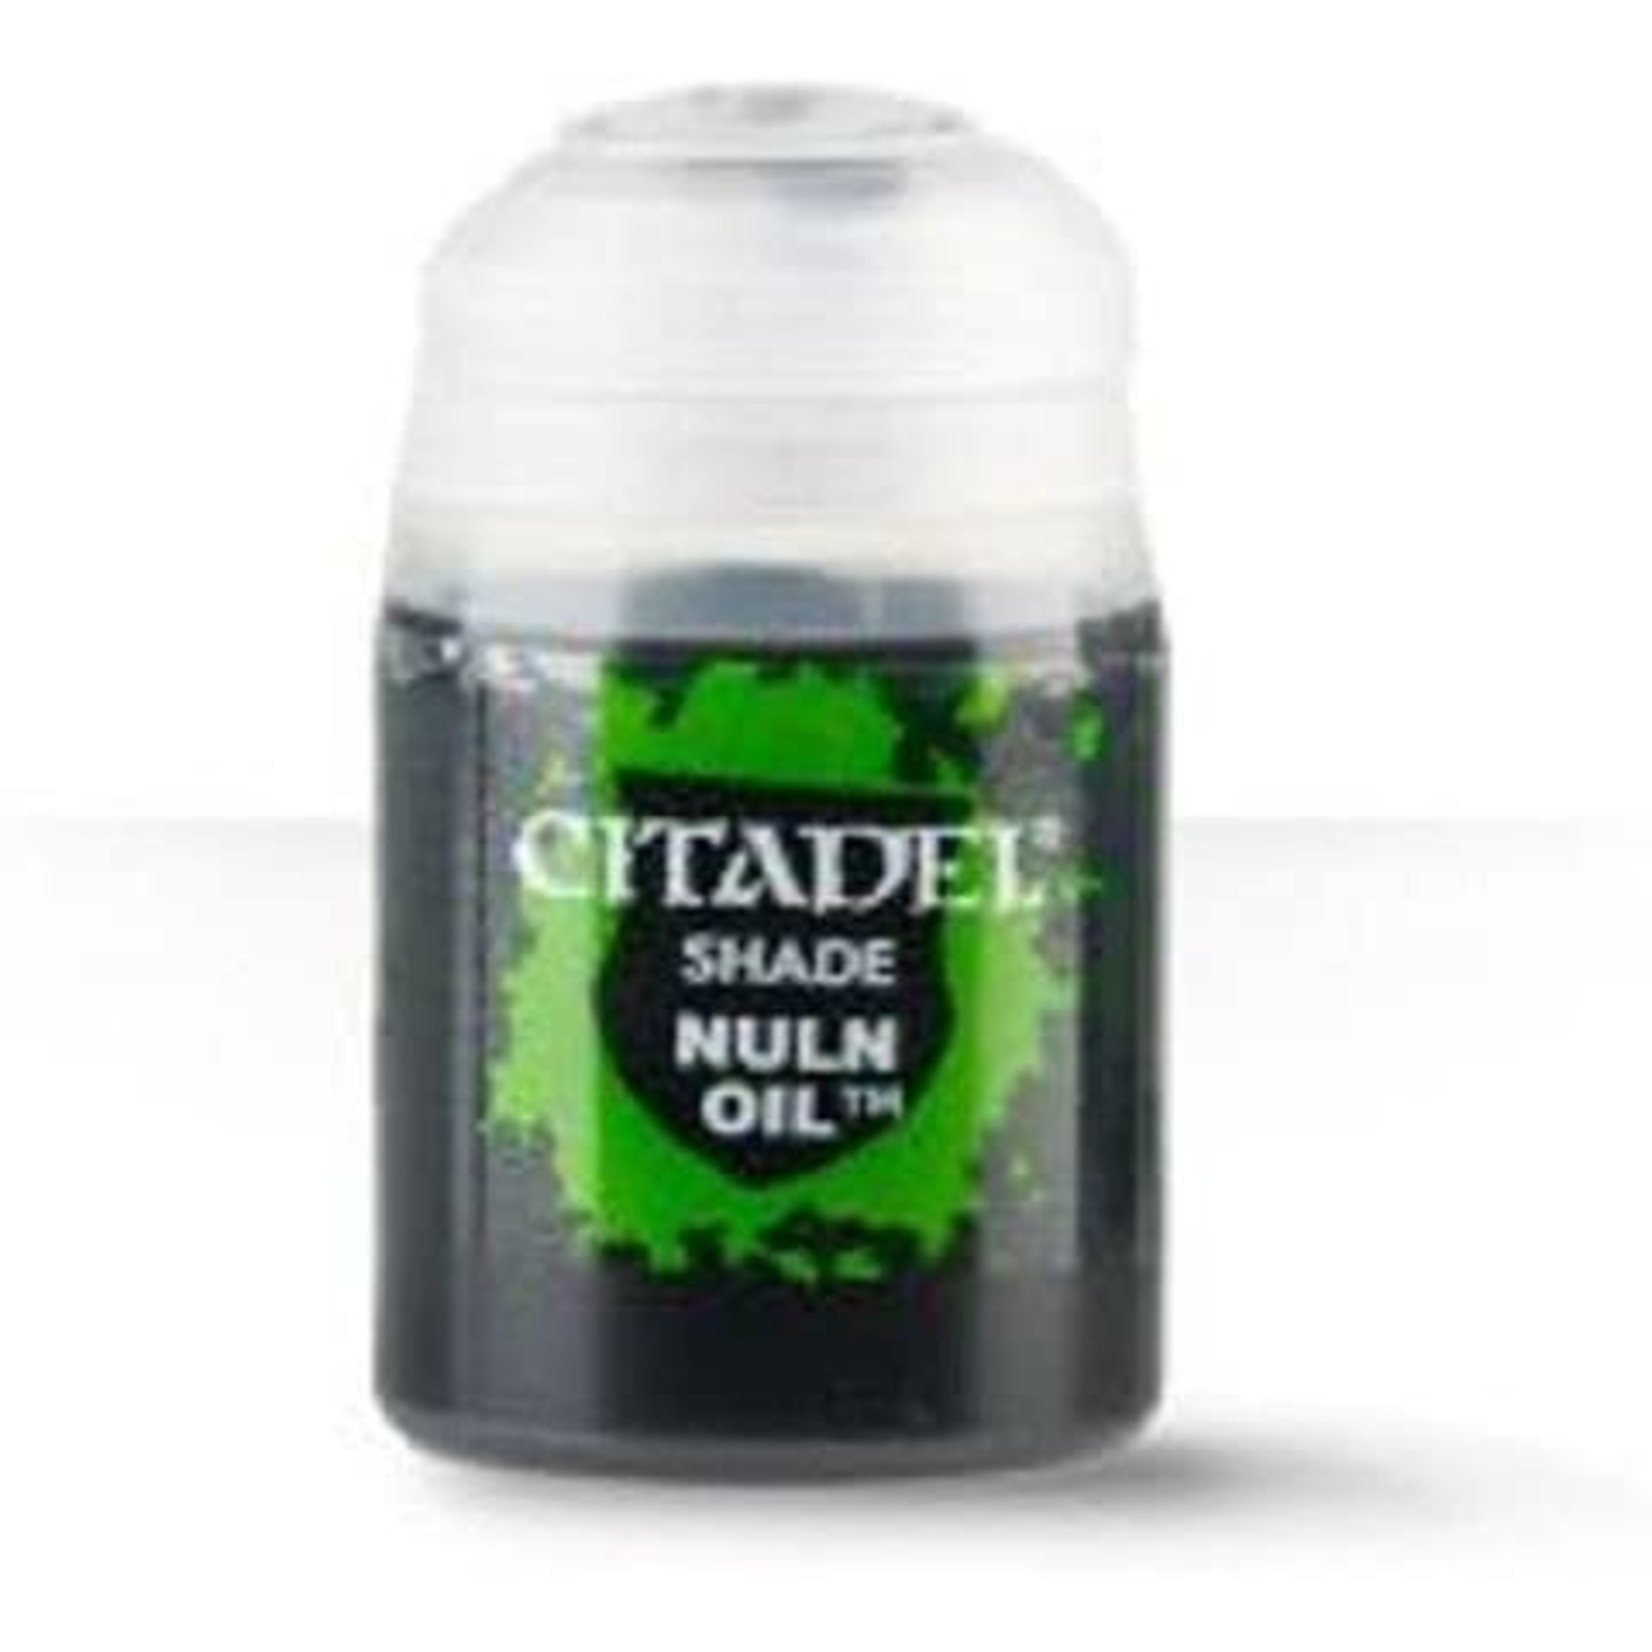 Citadel Paint: Nuln Oil 24ml  (OLD FORMULA)